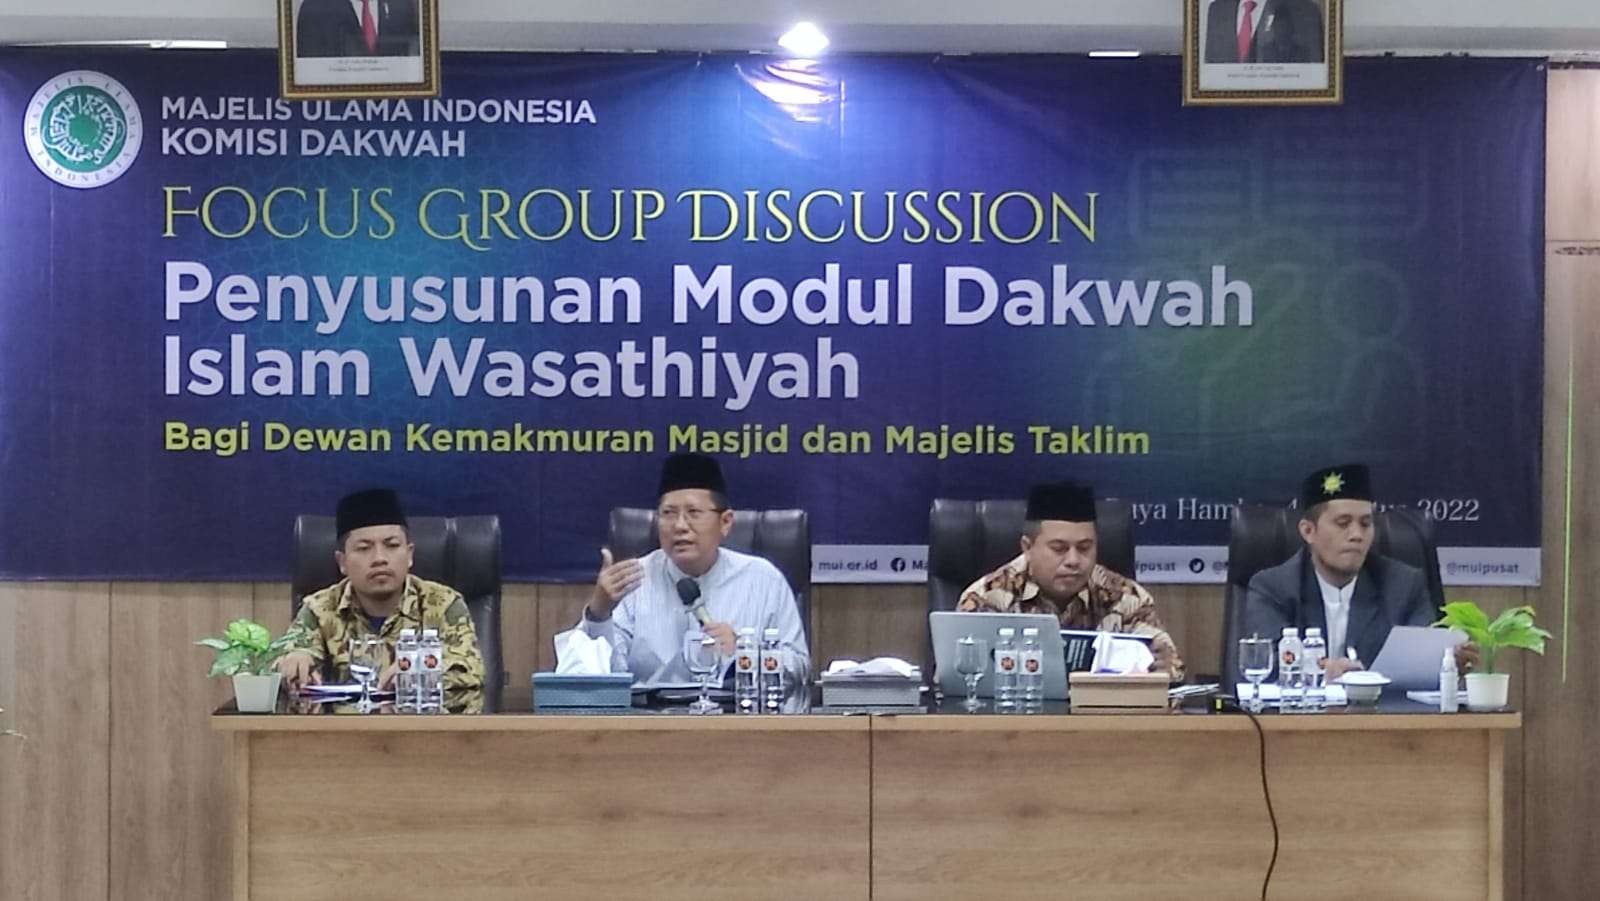 10 Prinsip Islam Wasathiyah MUI dalam Moderasi Beragama di Indonesia, mendapat apresiasi para ahli. Tampak, aktivitas MUI soal Islam Wasathiyah di Jakarta. (Foto: Istimewa)